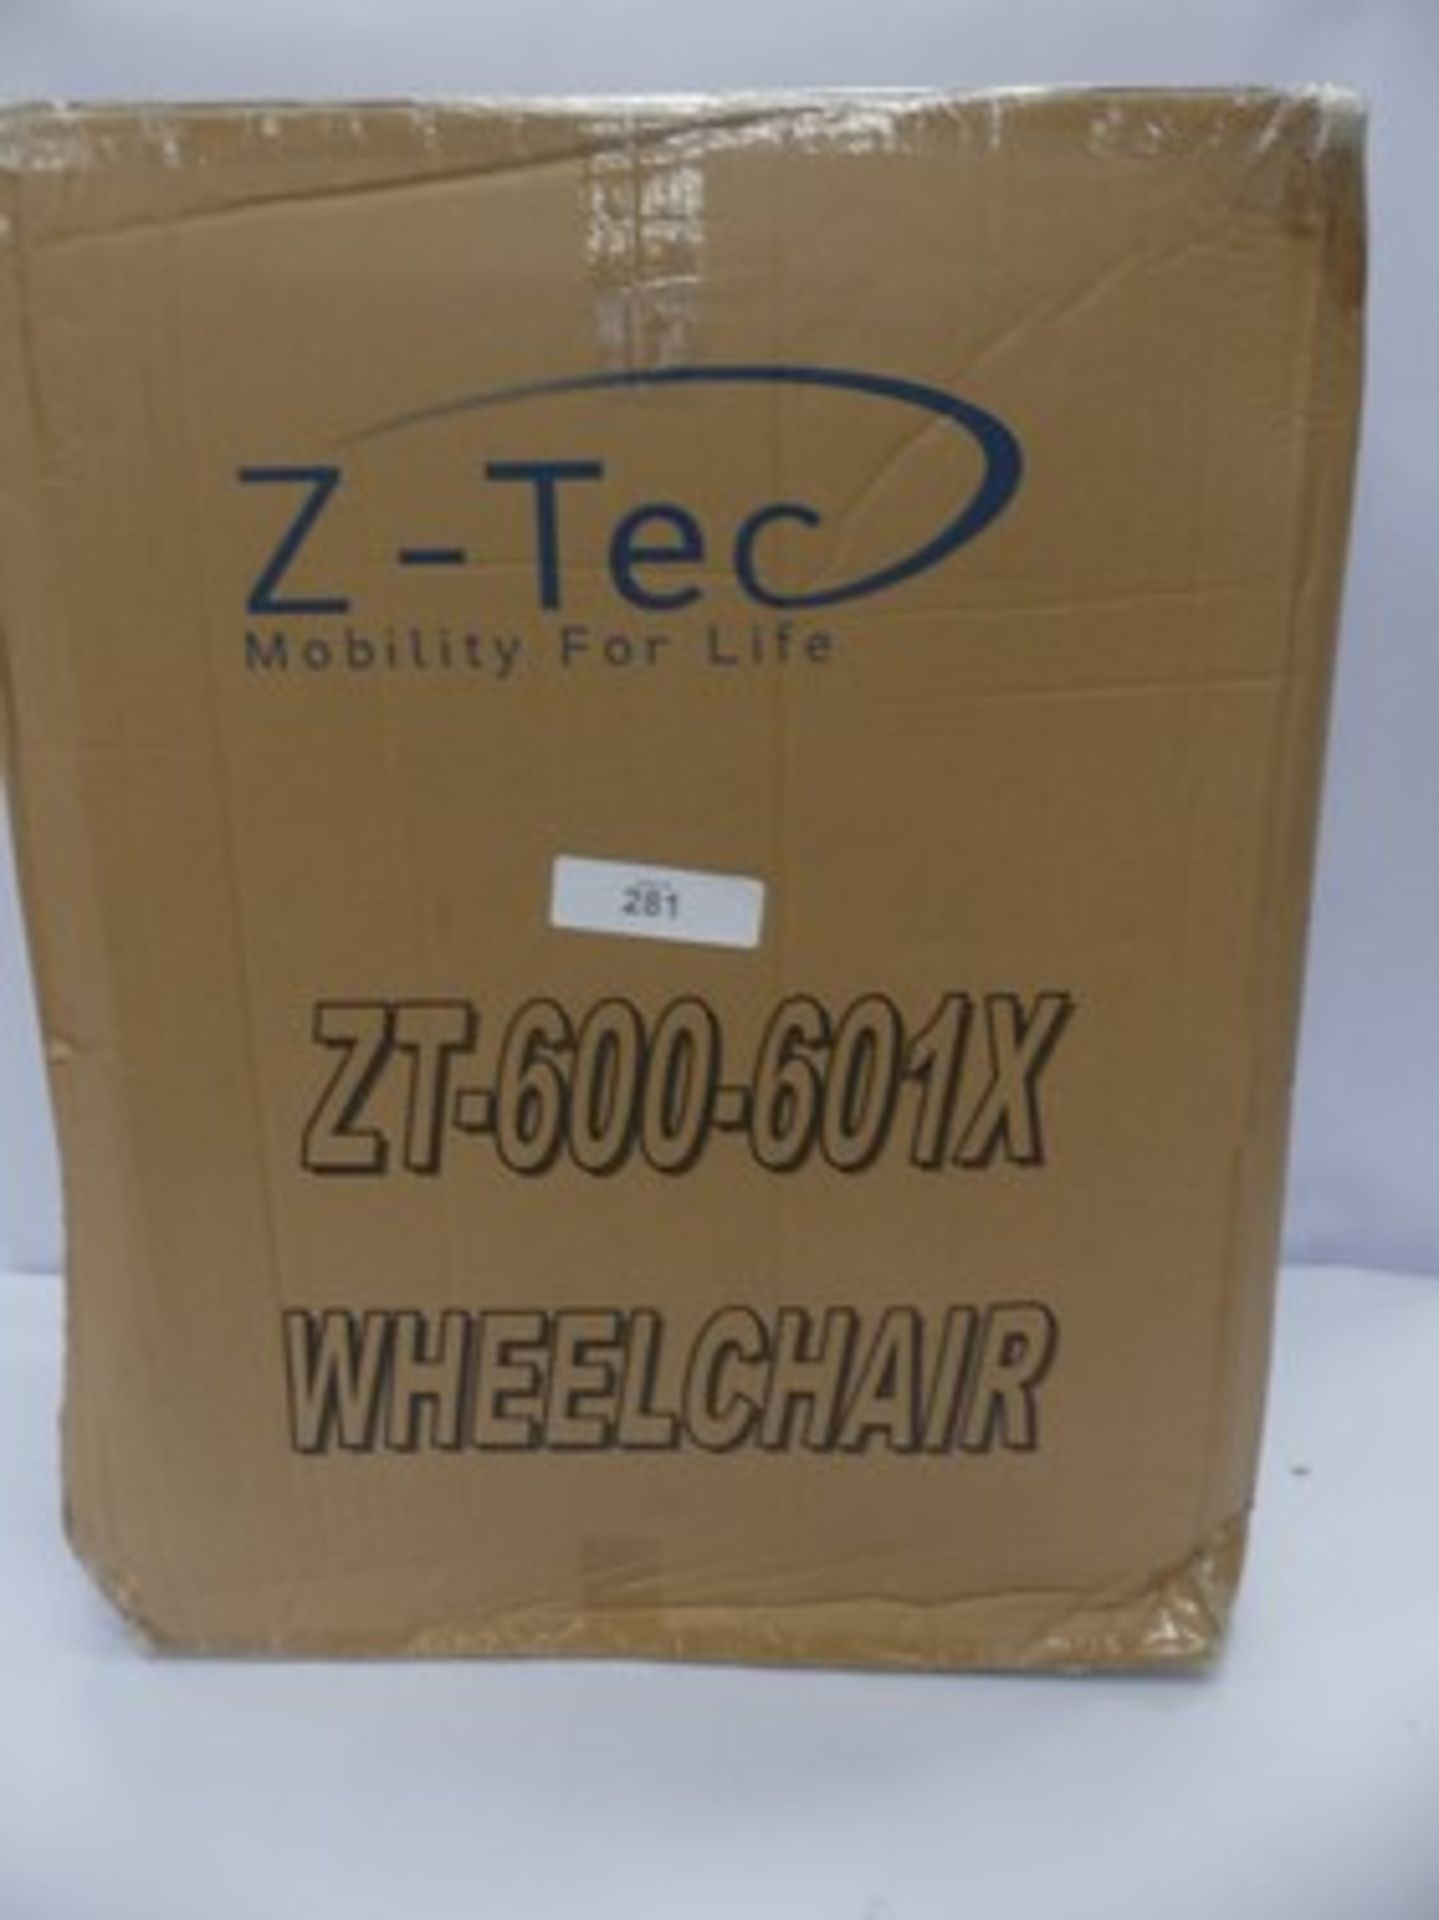 1 x Z-Tec wheelchair, model: ZT-600-601X - new in tatty box (GS33)